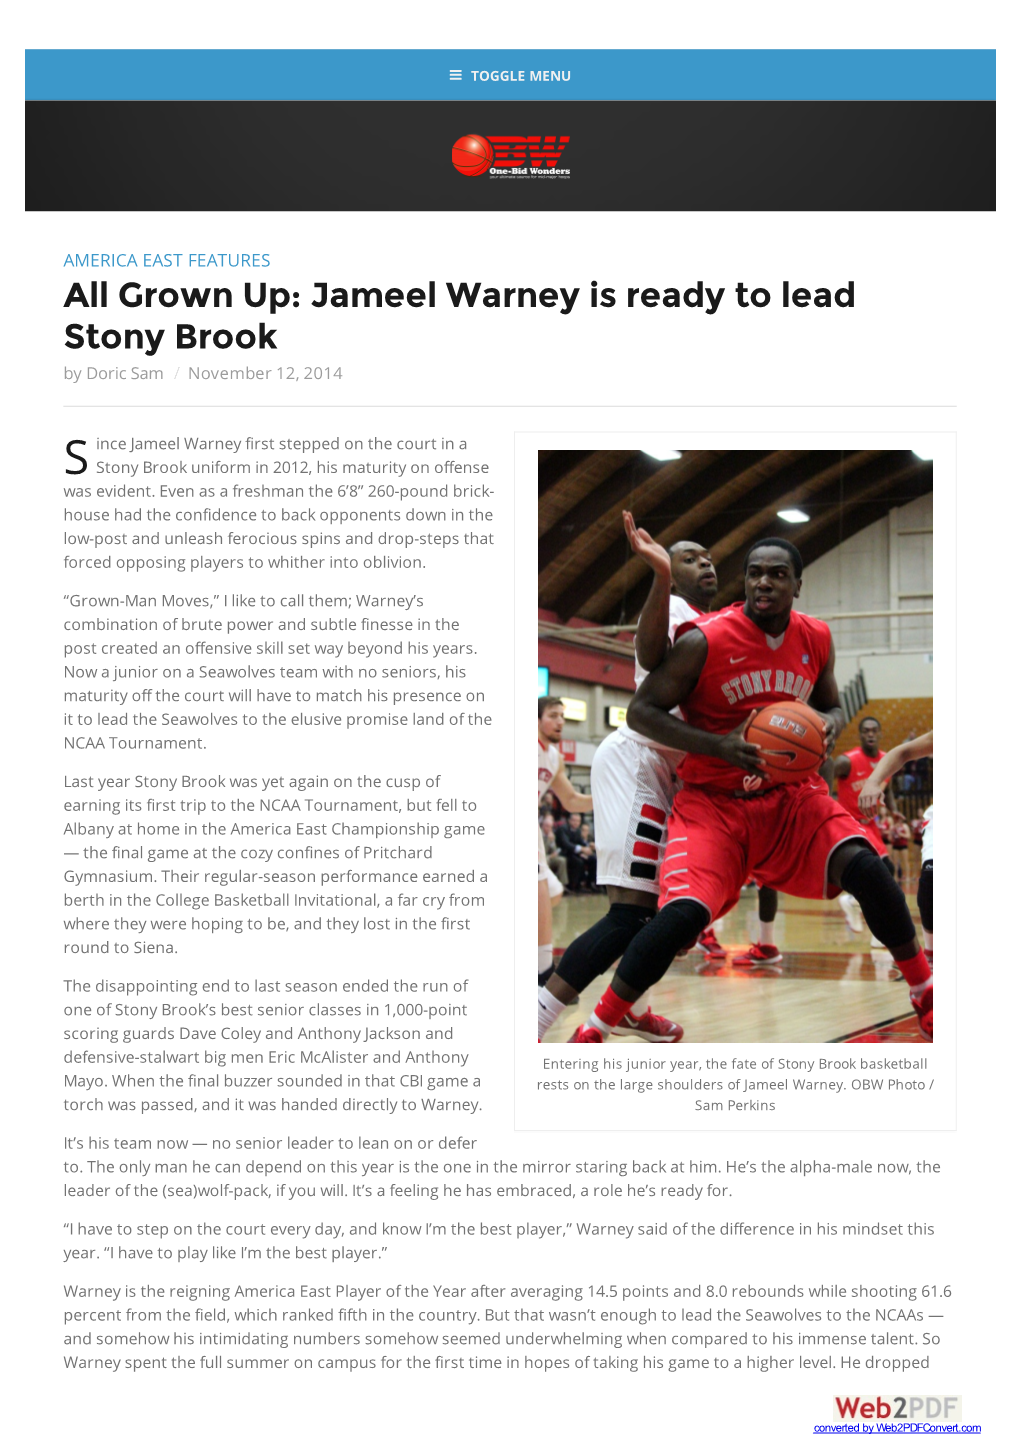 All Grown Up: Jameel Warney Is Ready to Lead Stony Brook | One-Bid